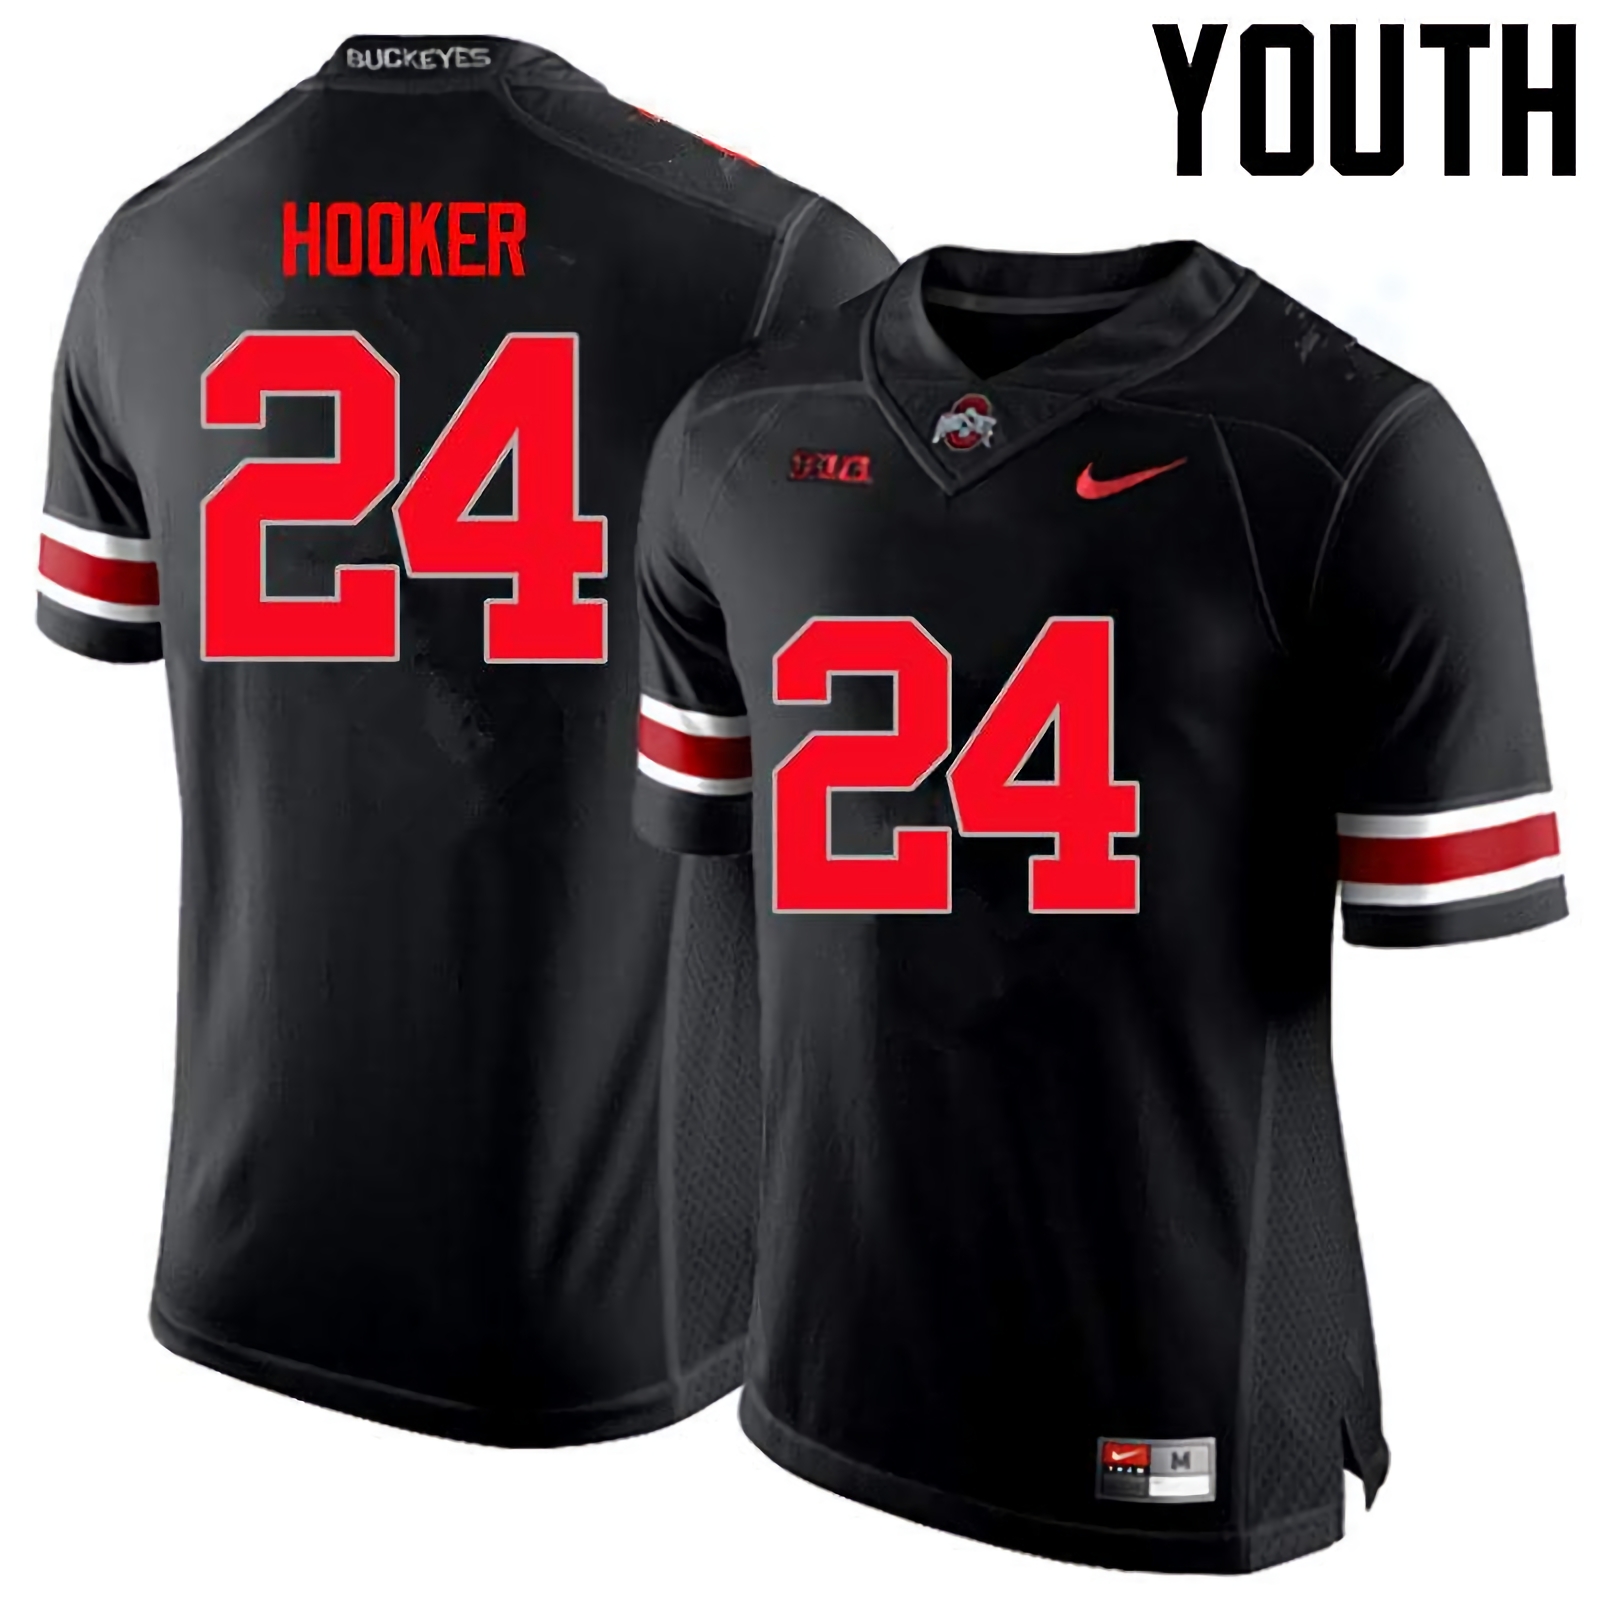 Malik Hooker Ohio State Buckeyes Youth NCAA #24 Nike Black Limited College Stitched Football Jersey FTH0556FU